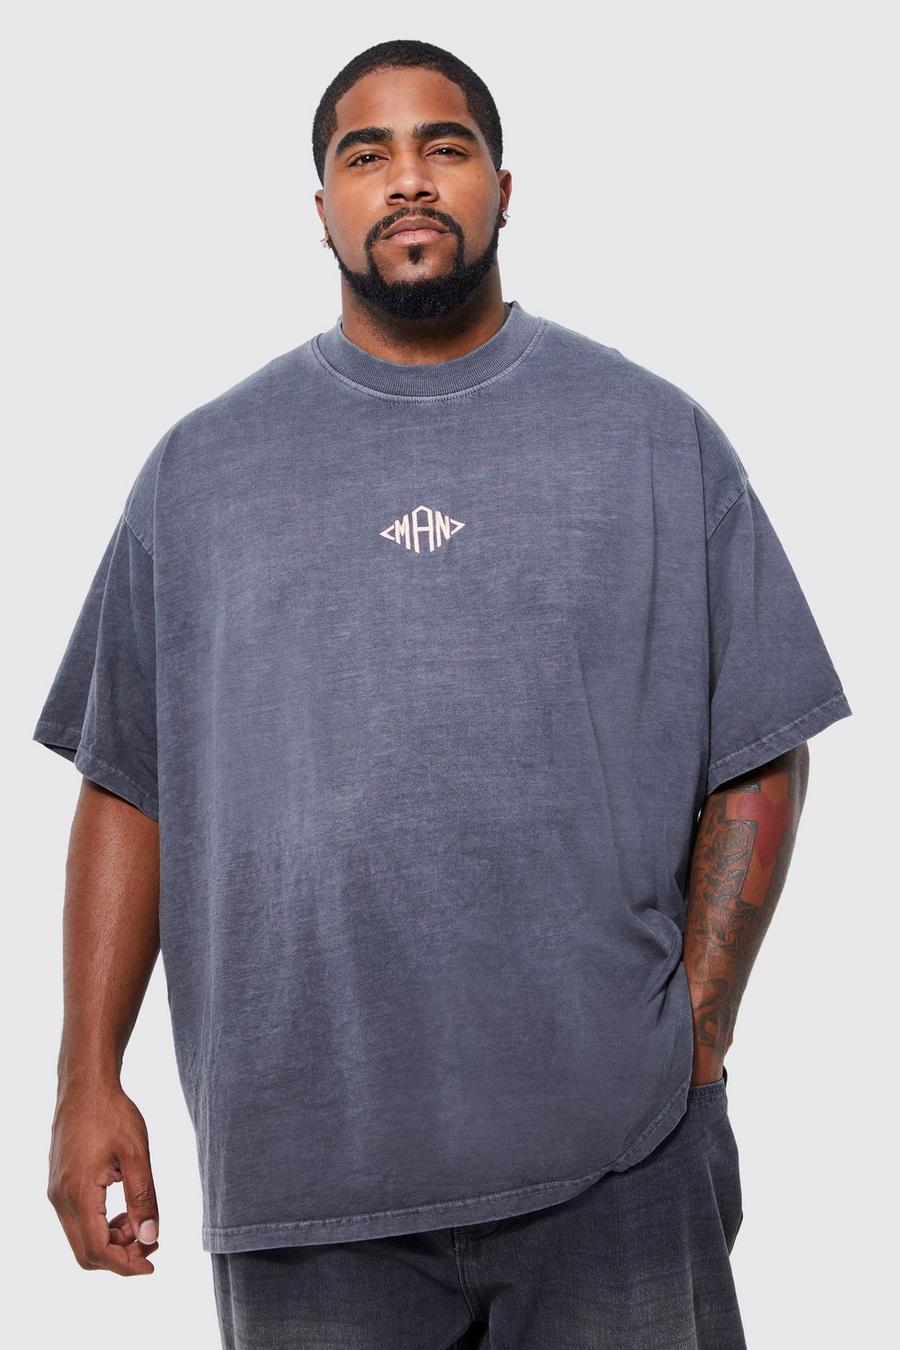 Plus Oversize Man T-Shirt, Charcoal grey